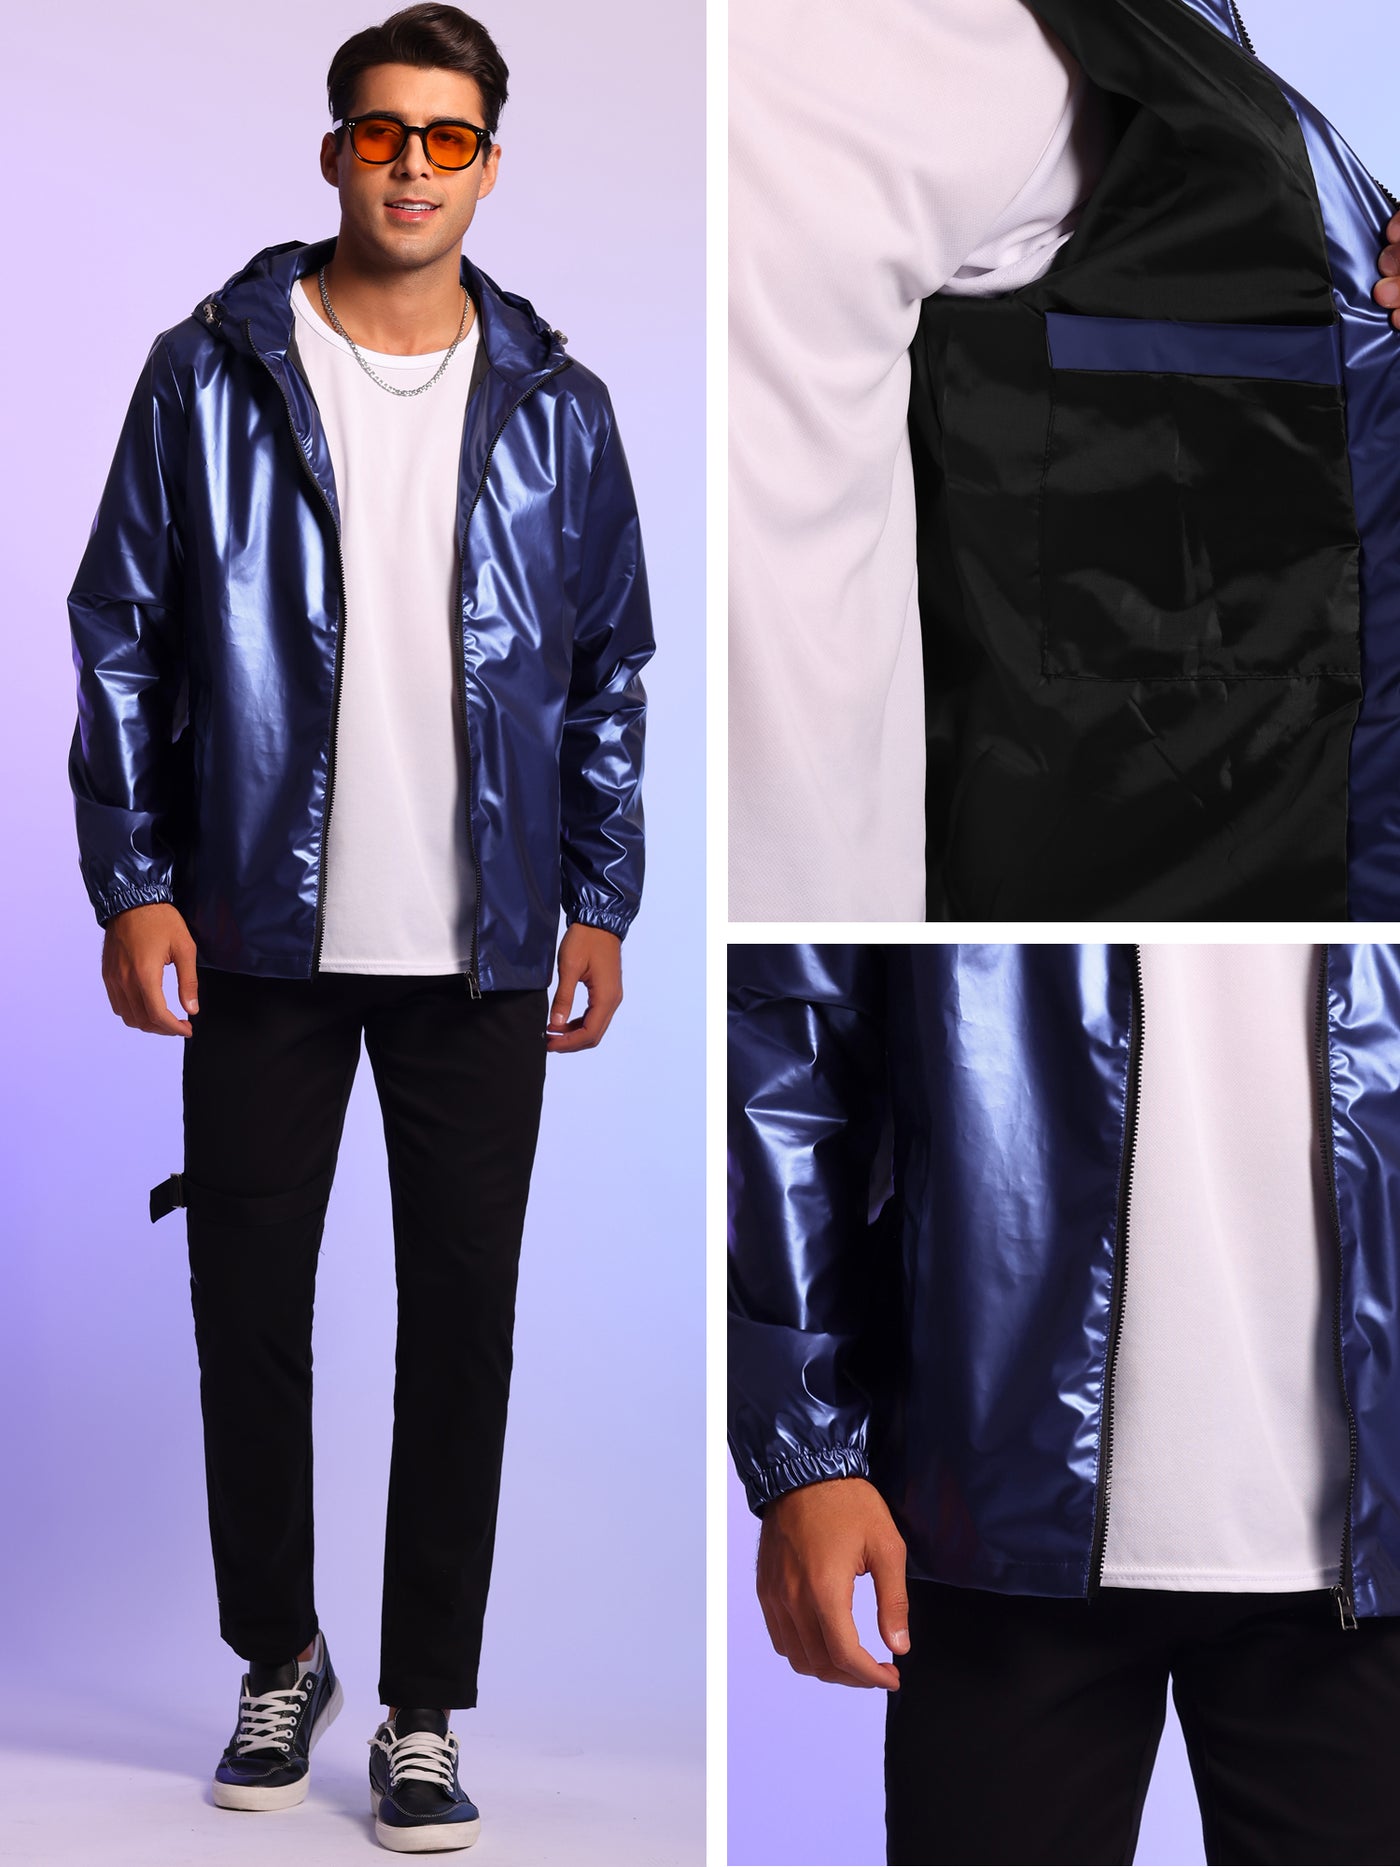 Bublédon Holographic Jacket for Men's Lightweight Long Sleeves Metallic Shiny Hoodie Coat